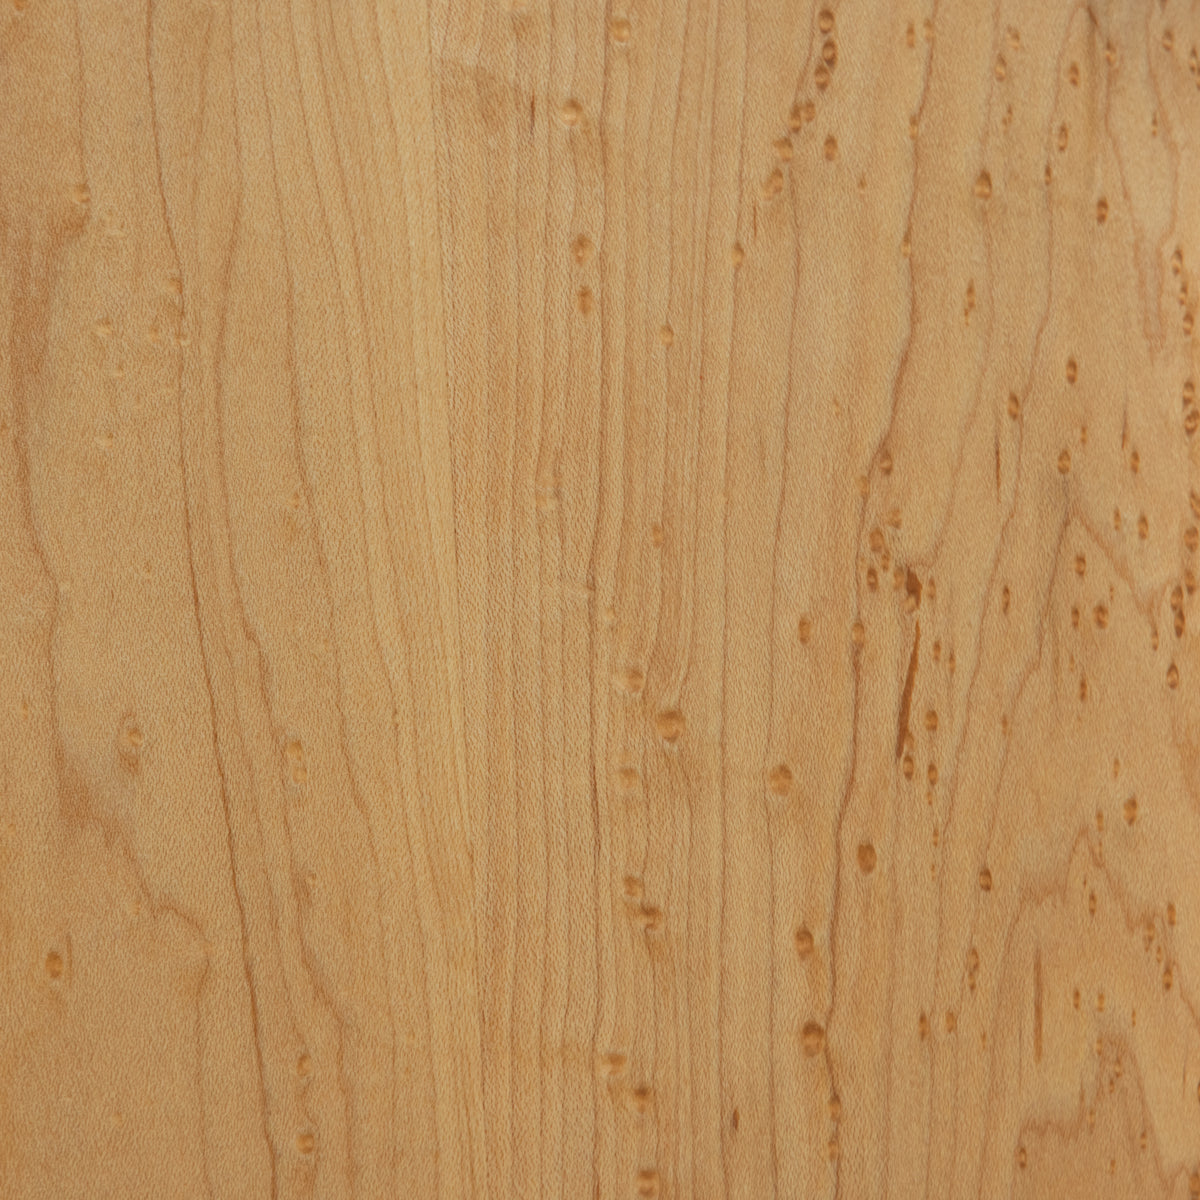 Maple Cutting Board - 8.5 x 13